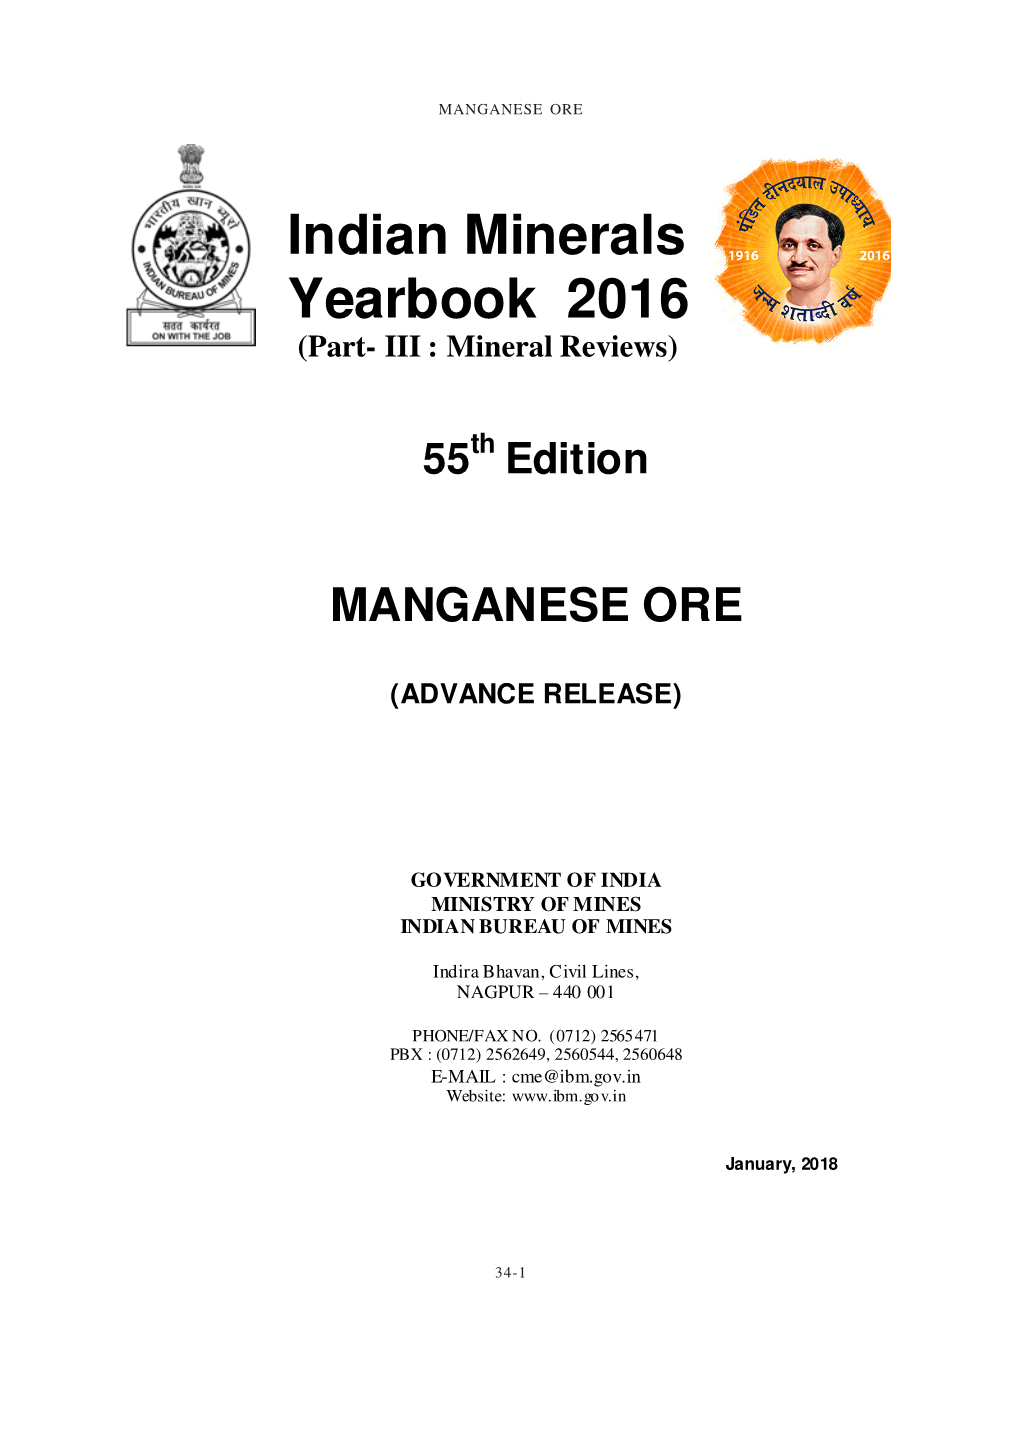 Manganese Ore-2016.Pmd